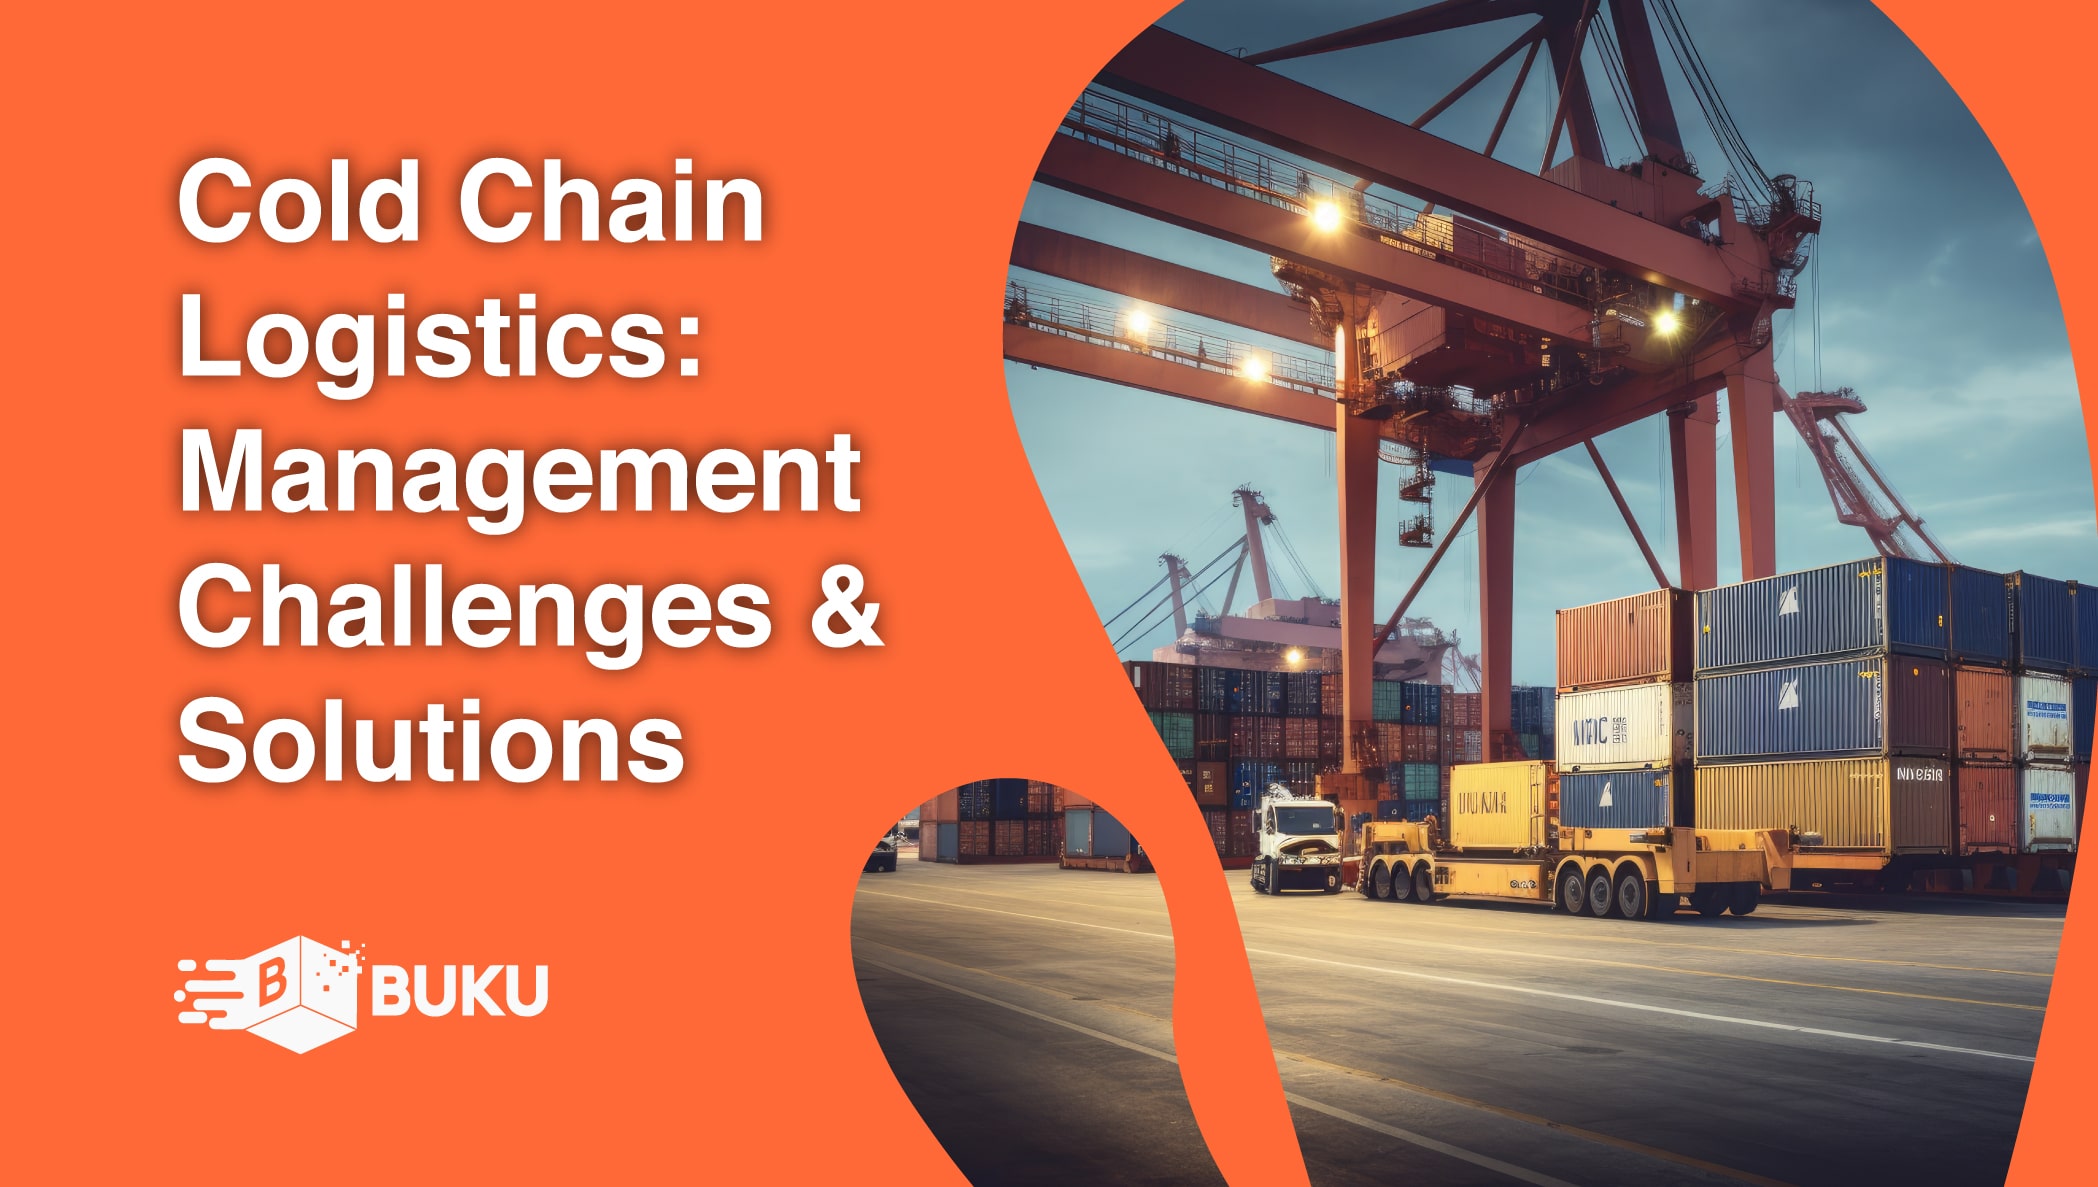 Cold Chain Logistics: Management Challenges & Solutions